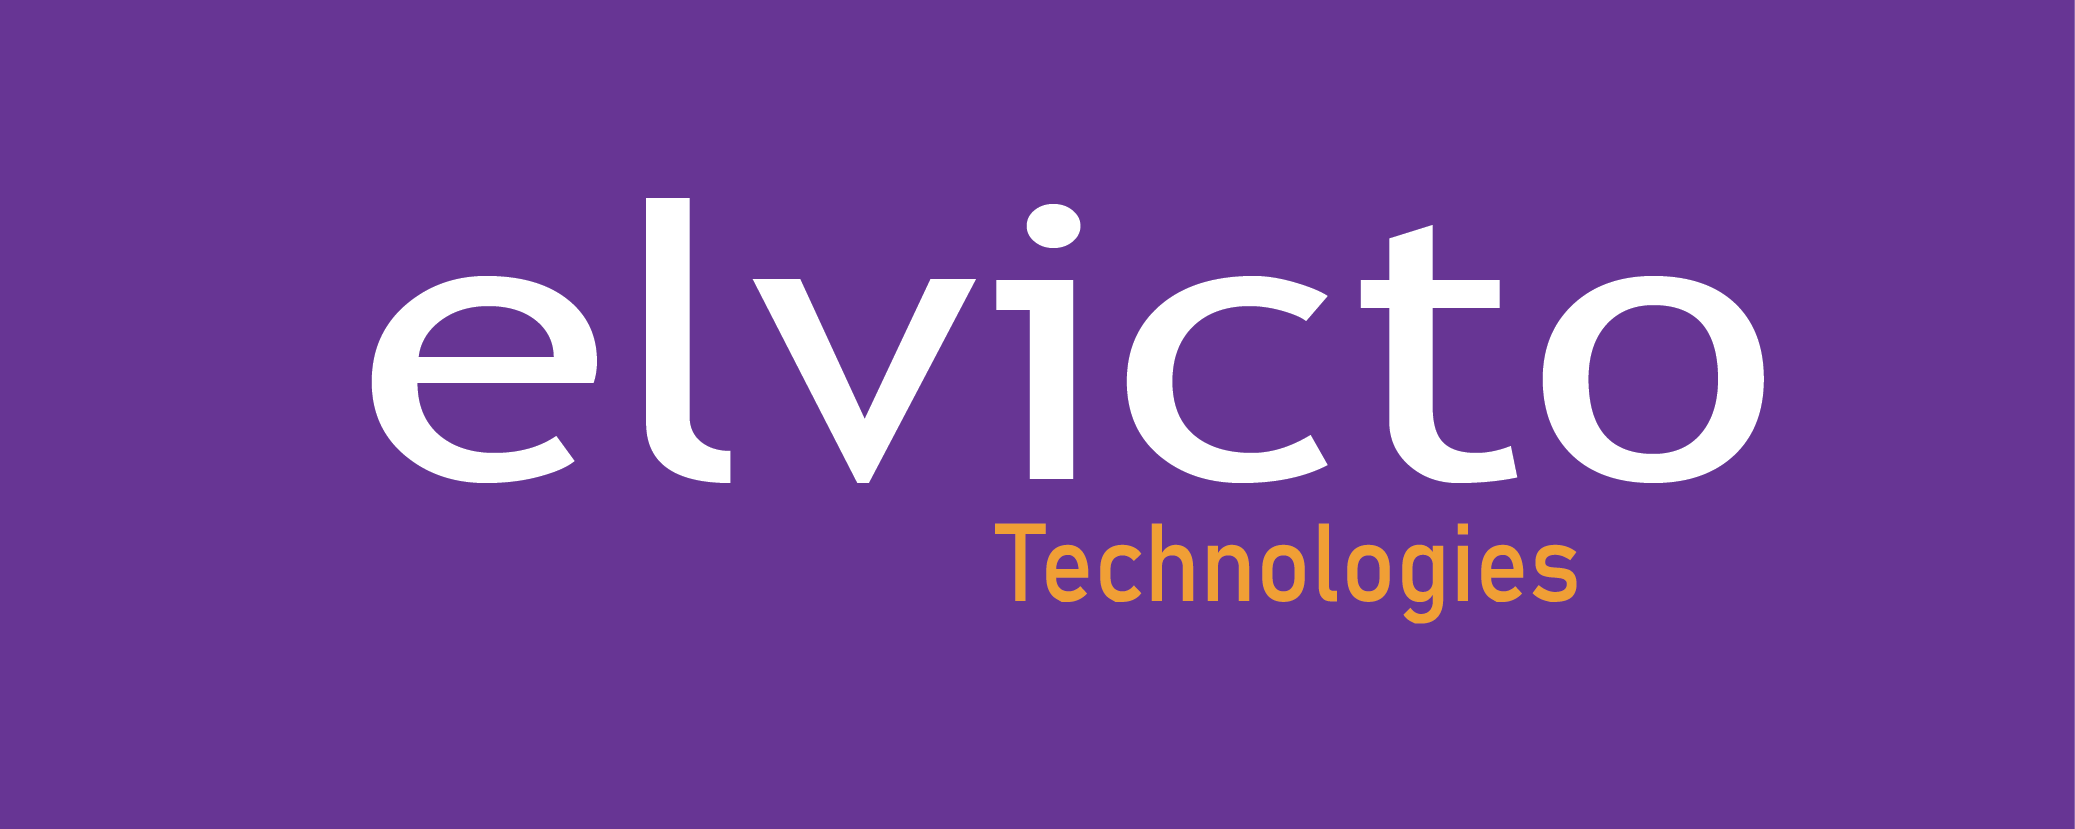 Elvicto Technologies